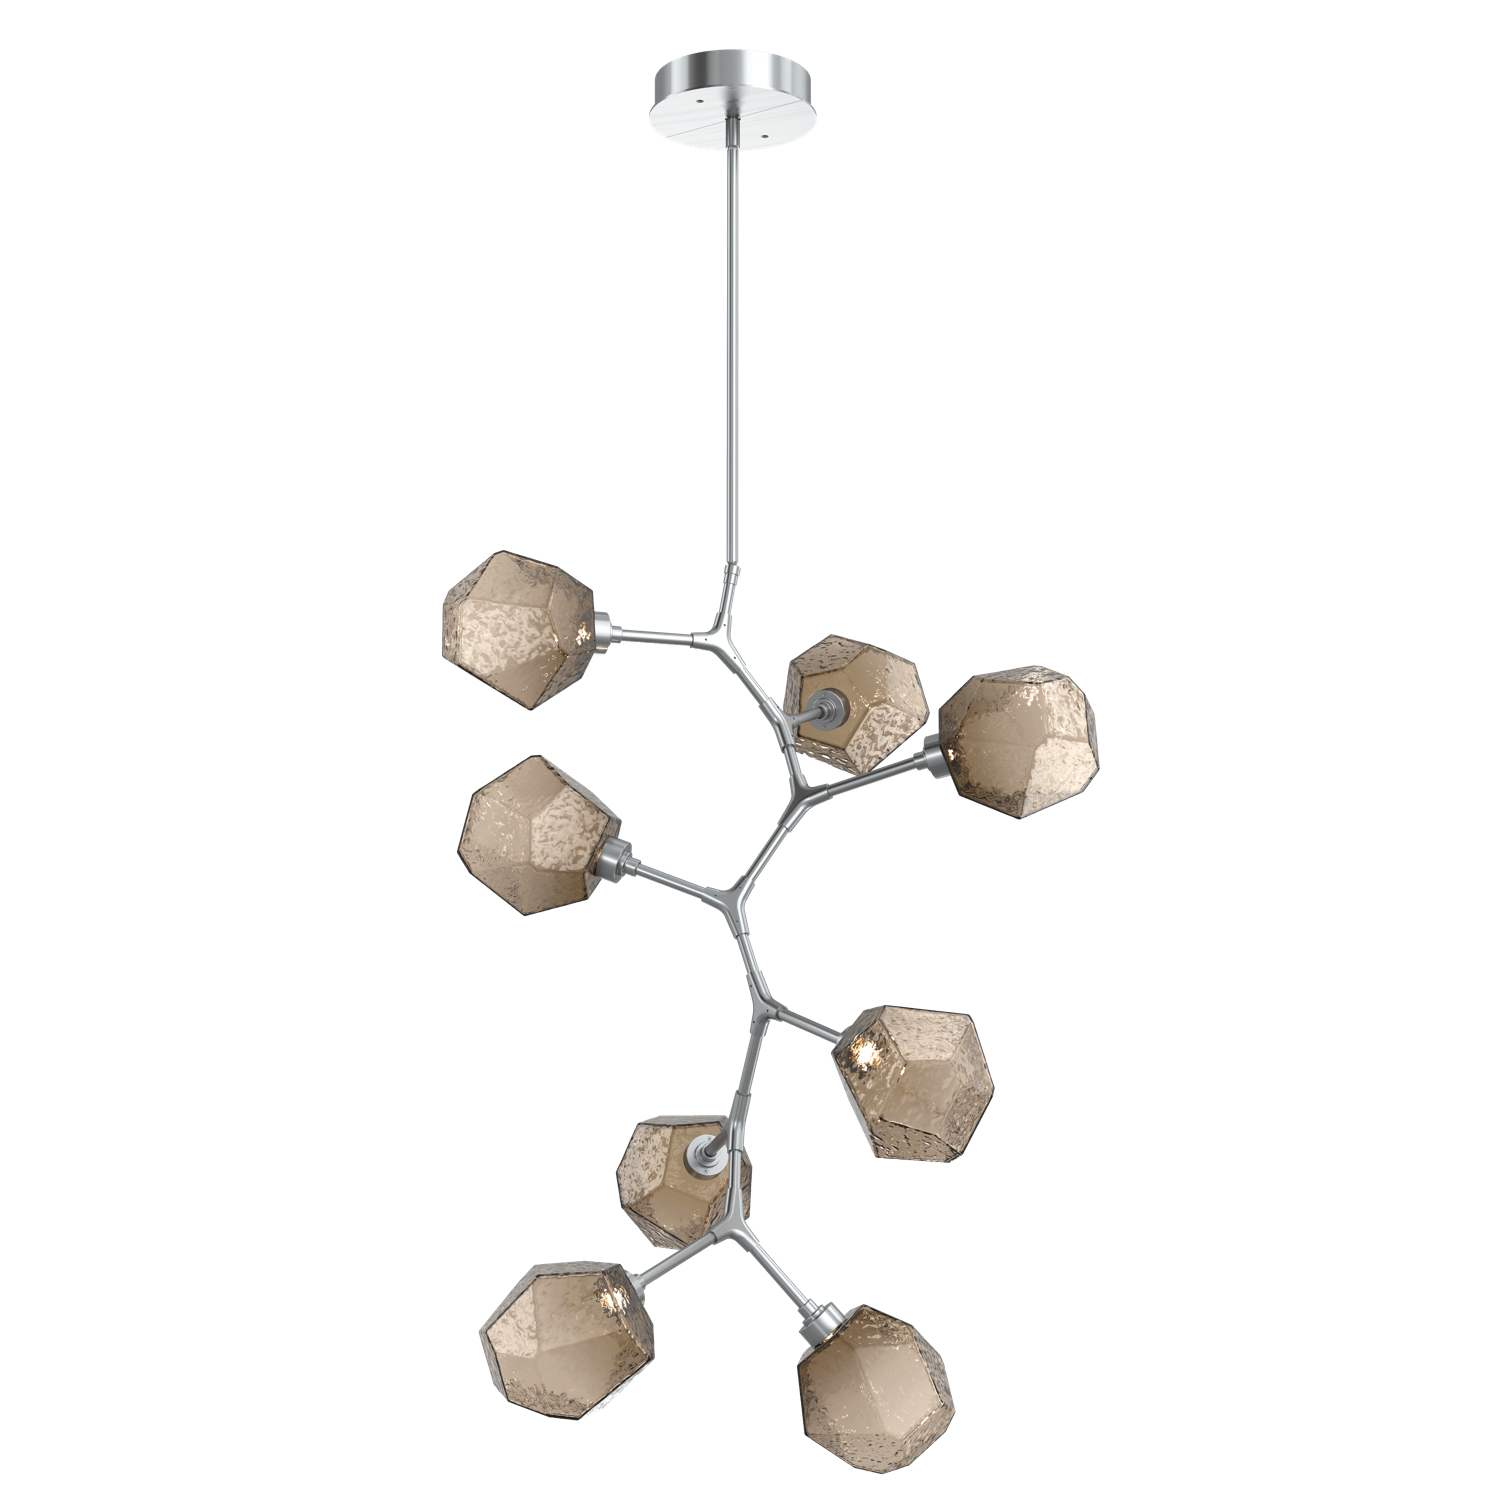 CHB0039-VB-SN-B-Hammerton-Studio-Gem-8-light-modern-vine-chandelier-with-satin-nickel-finish-and-bronze-blown-glass-shades-and-LED-lamping